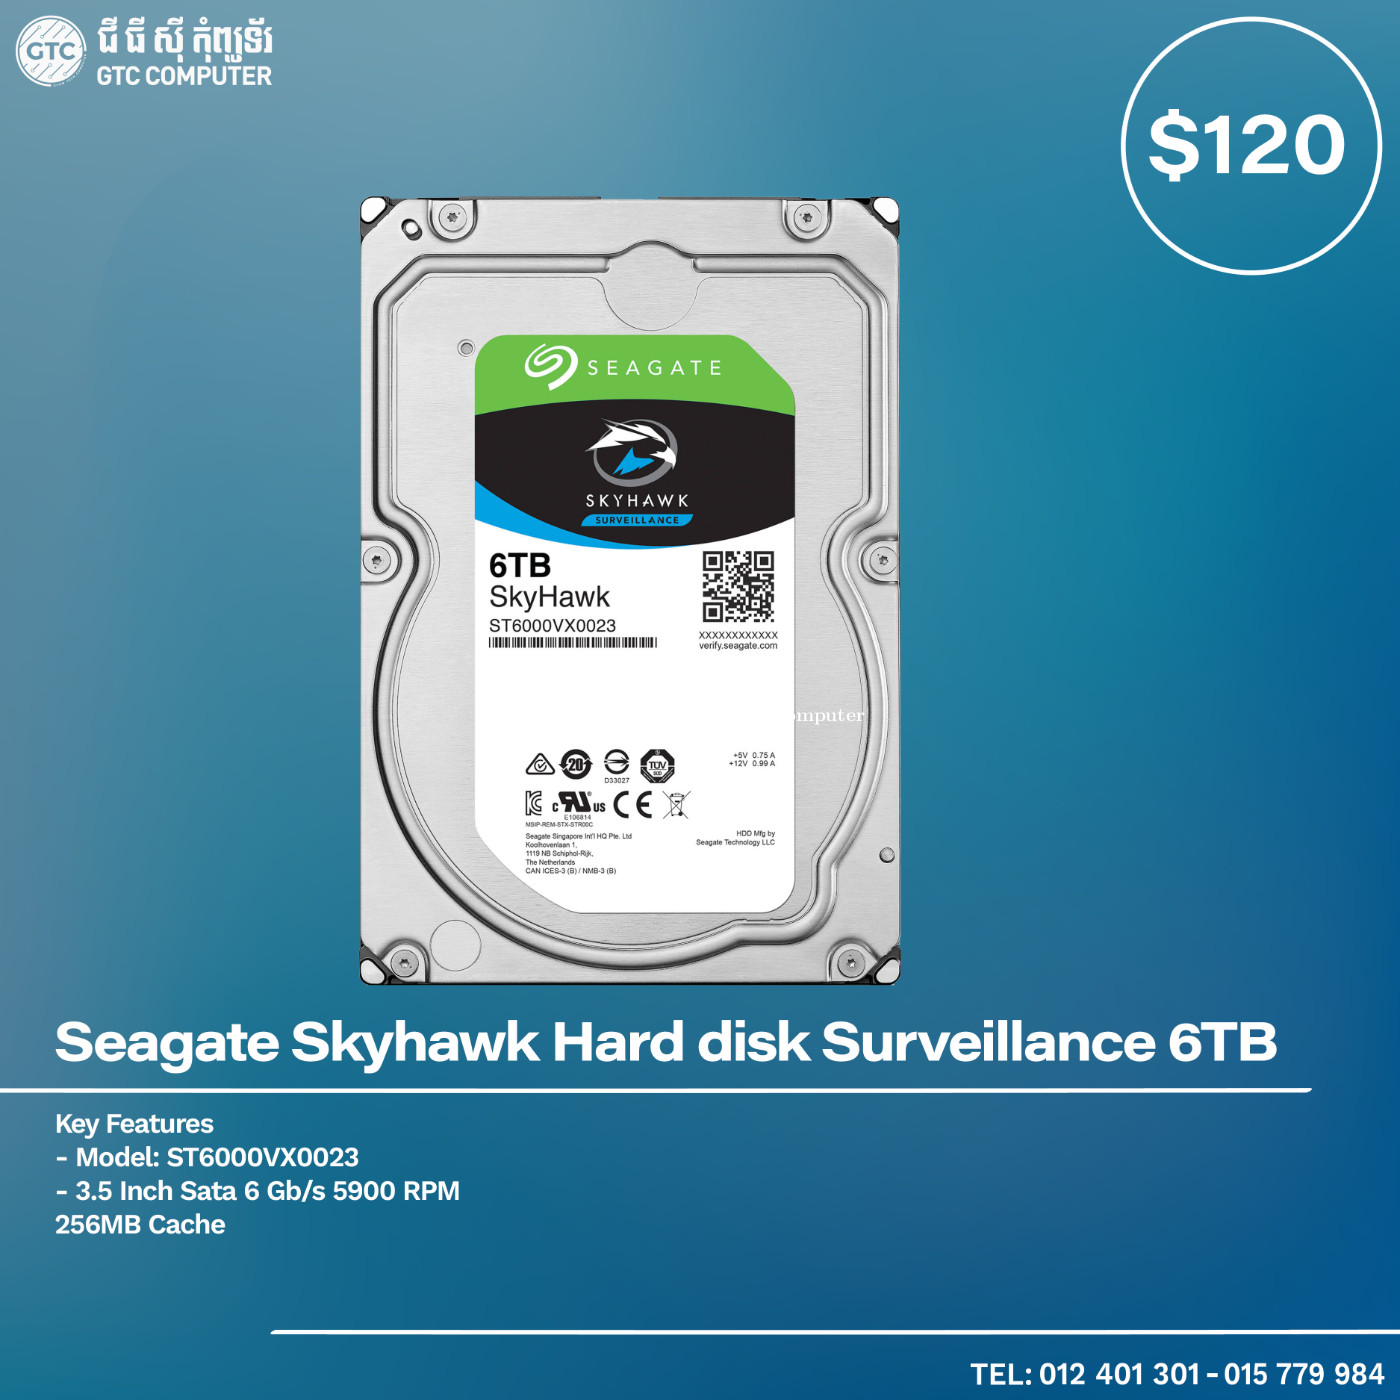 Seagate Skyhawk Hard disk Surveillance 6TB price $120.00 in Veal Vong,  Prampir Meakkakra, Phnom Penh, Cambodia - GTC Computer